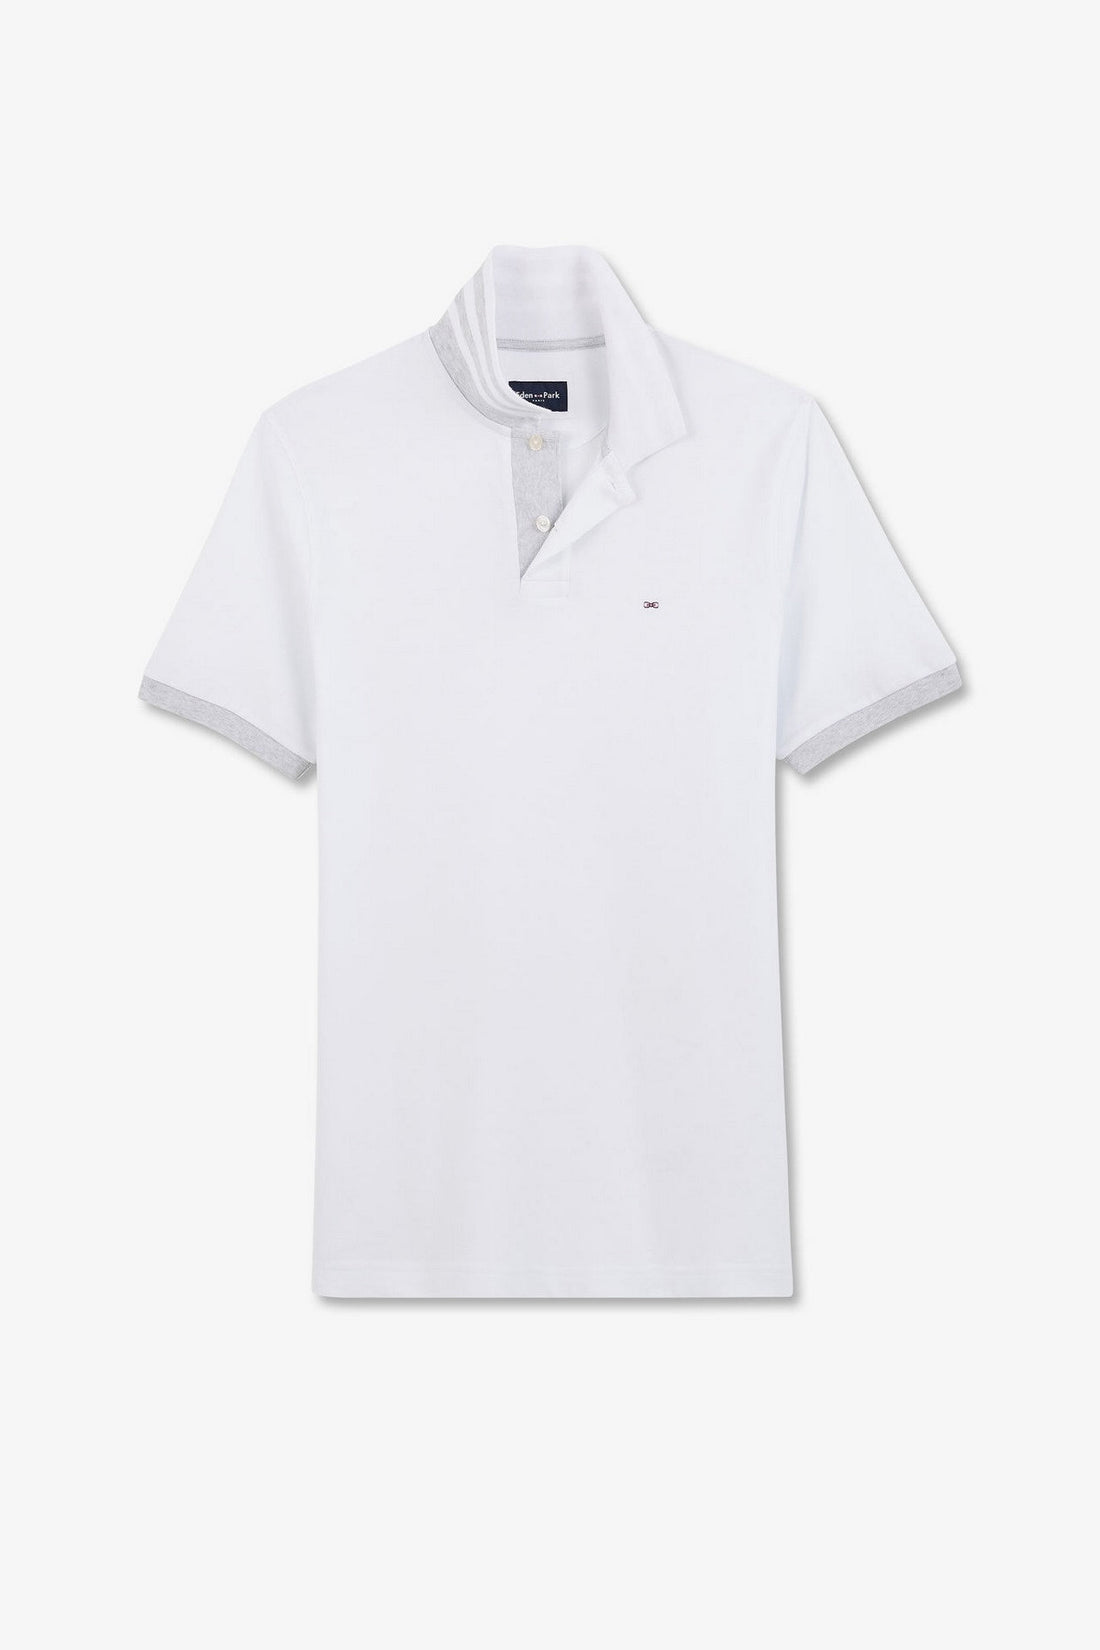 White Short-Sleeved Polo Shirt_E24MAIPC0005_BC_01